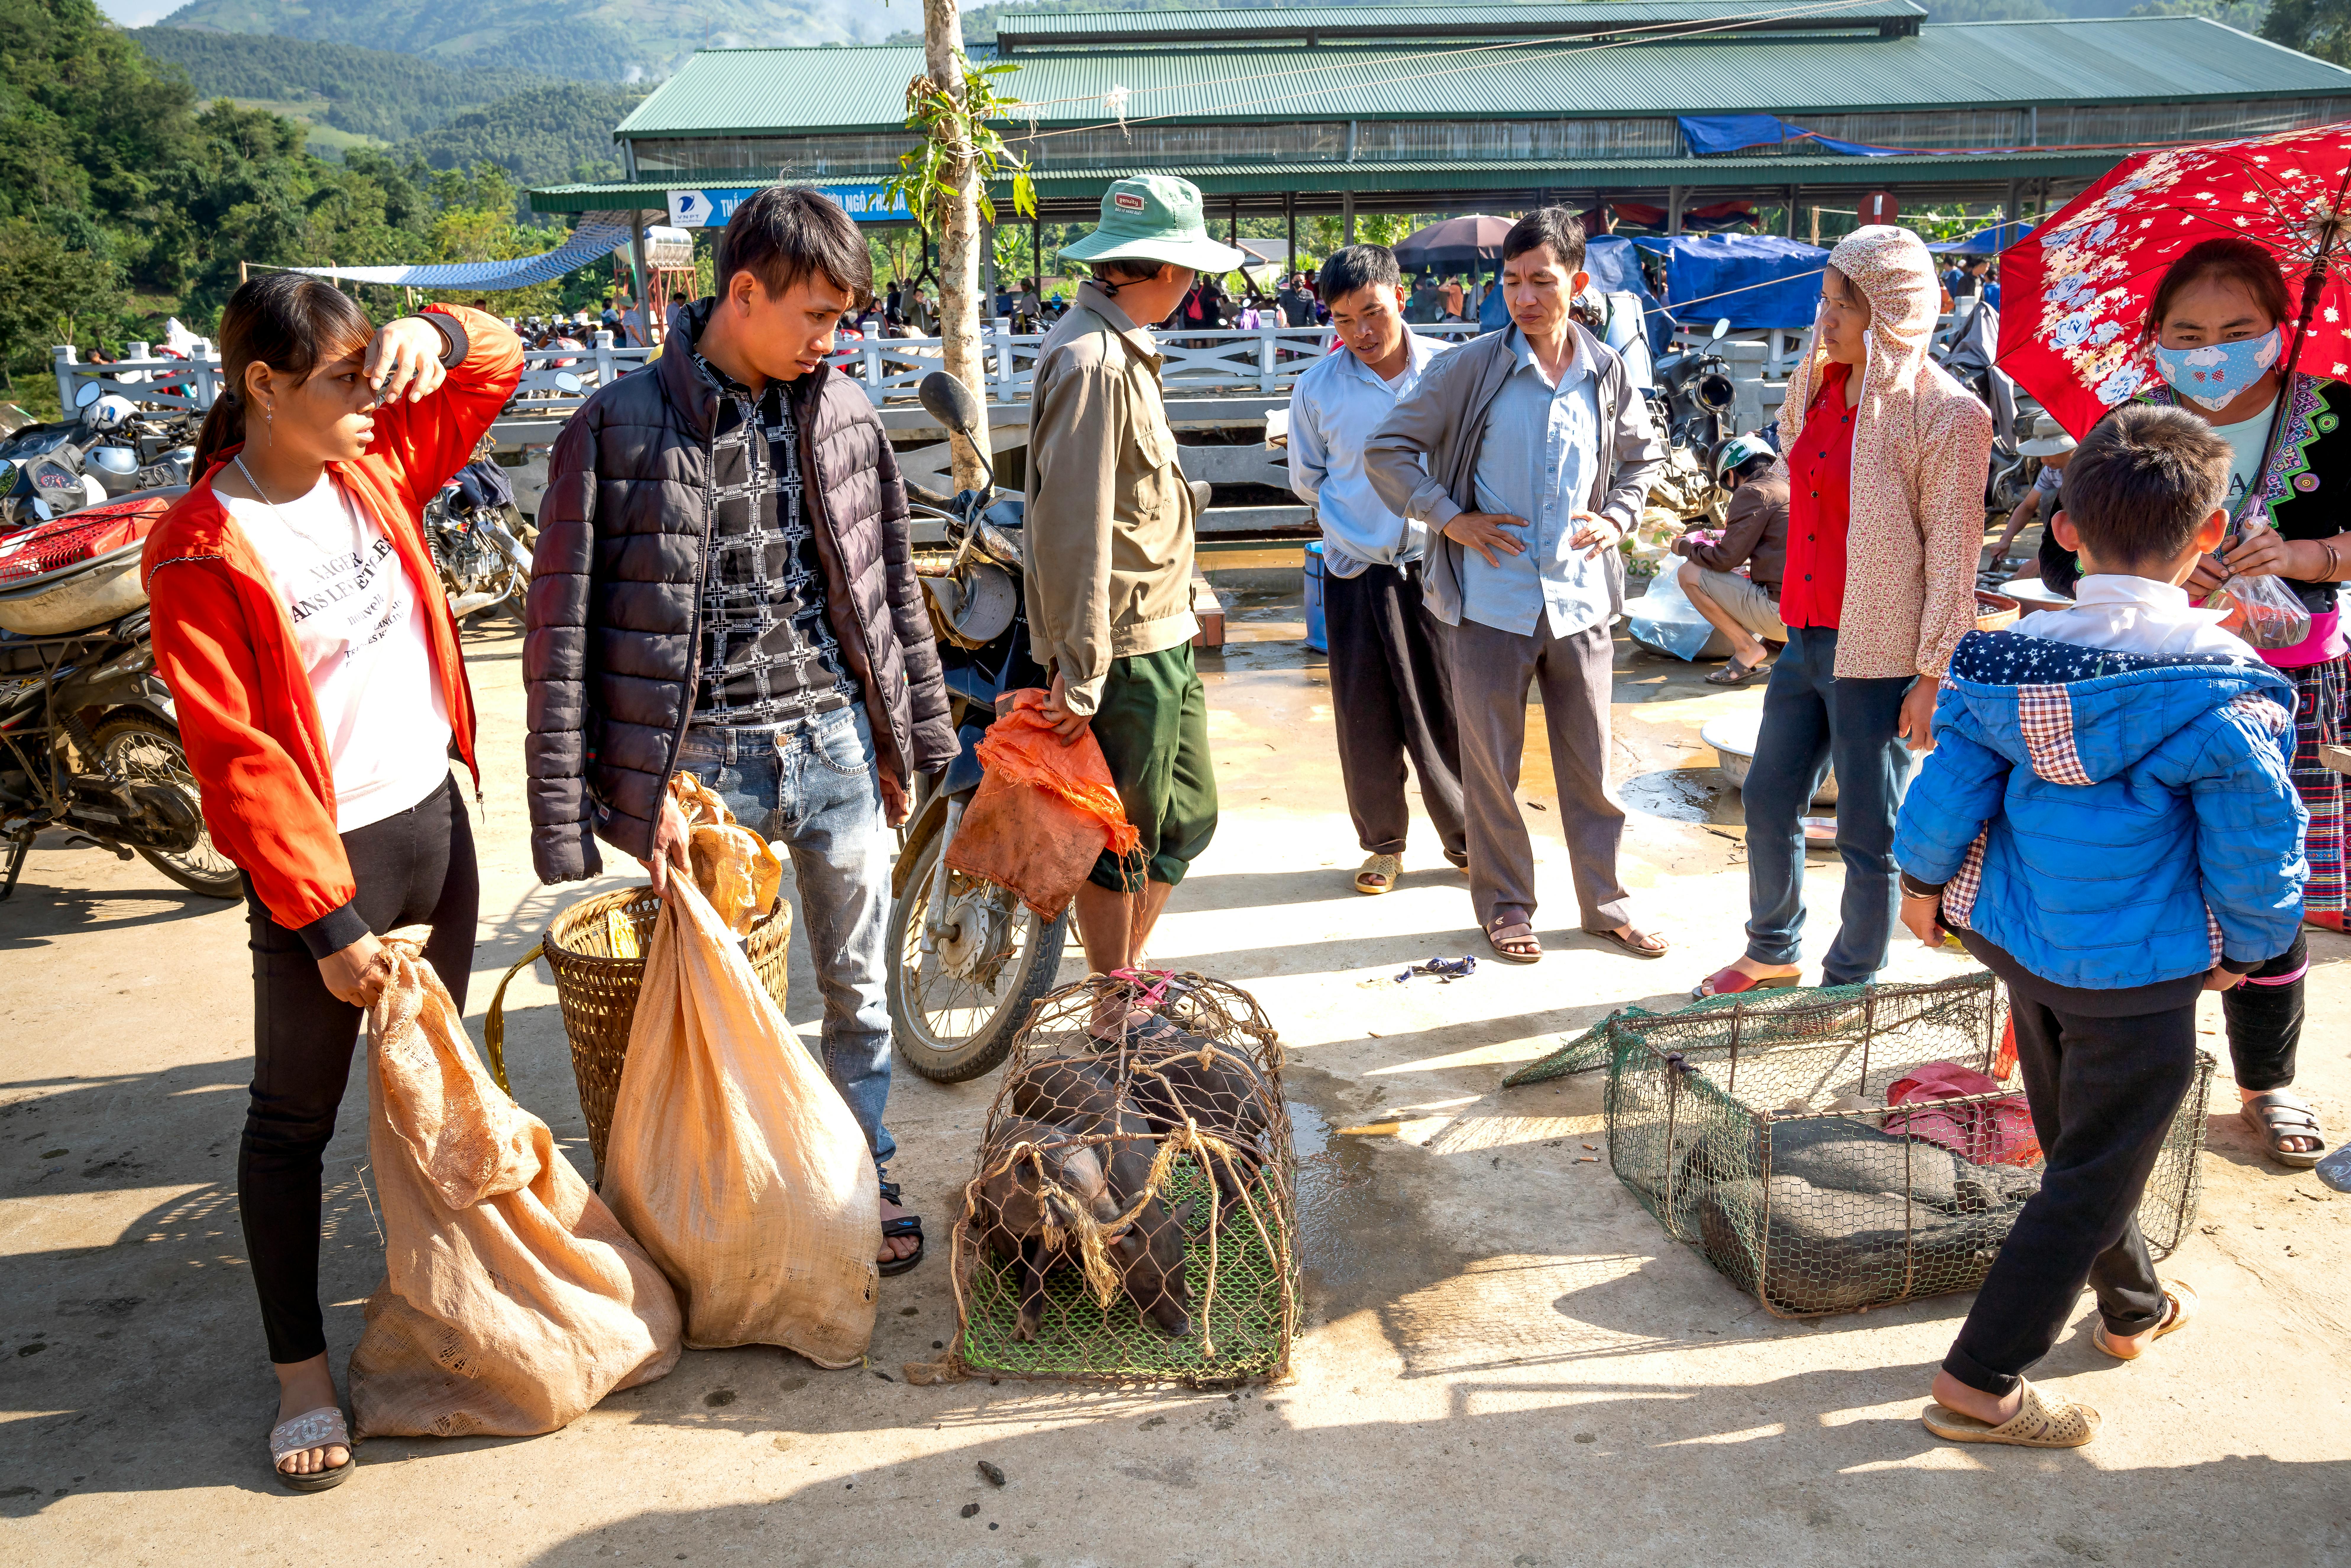 ethnic vendors with pigs against buyers in bazaar